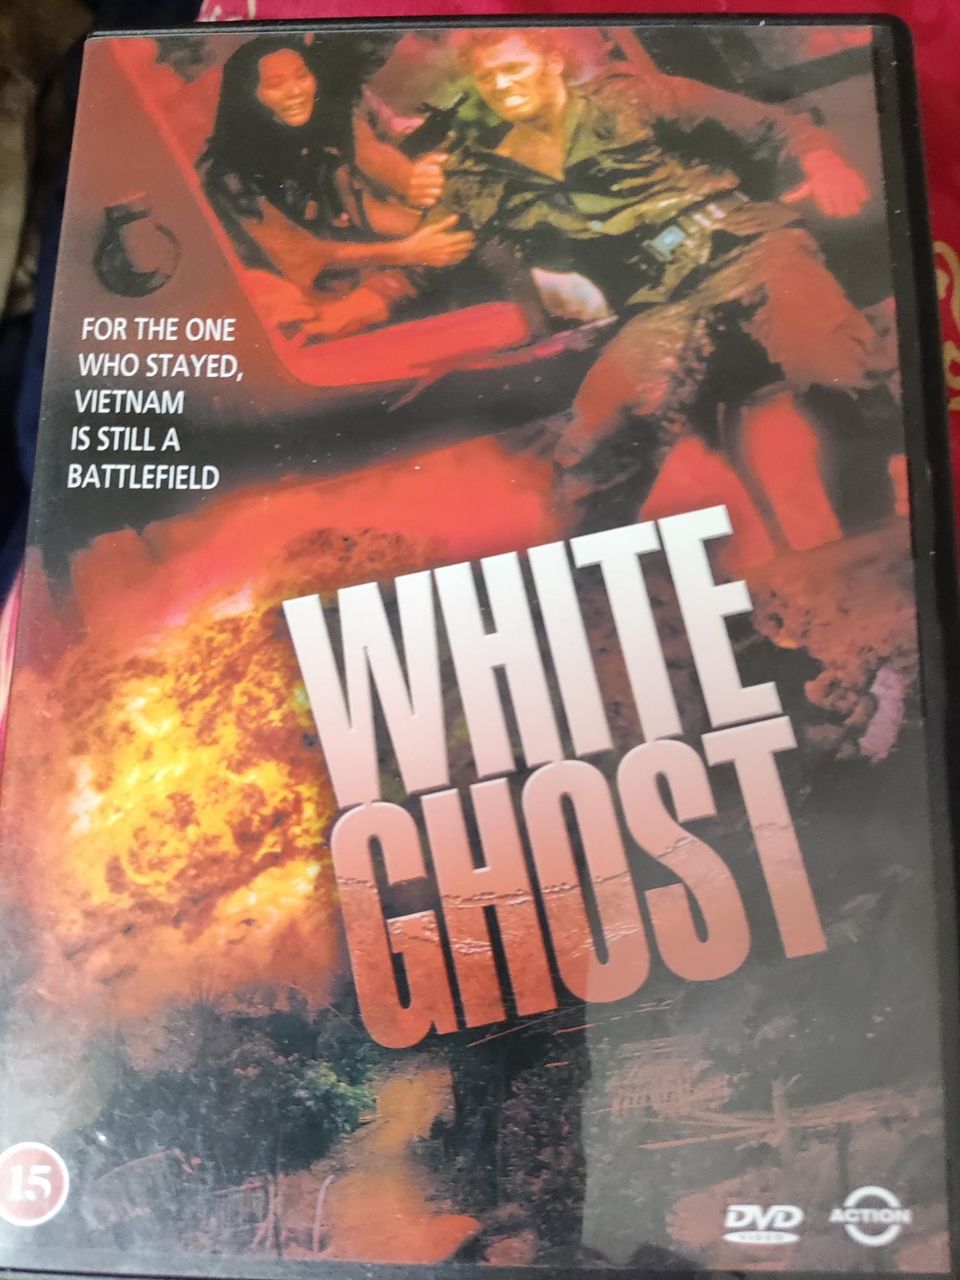 White Ghost DVD